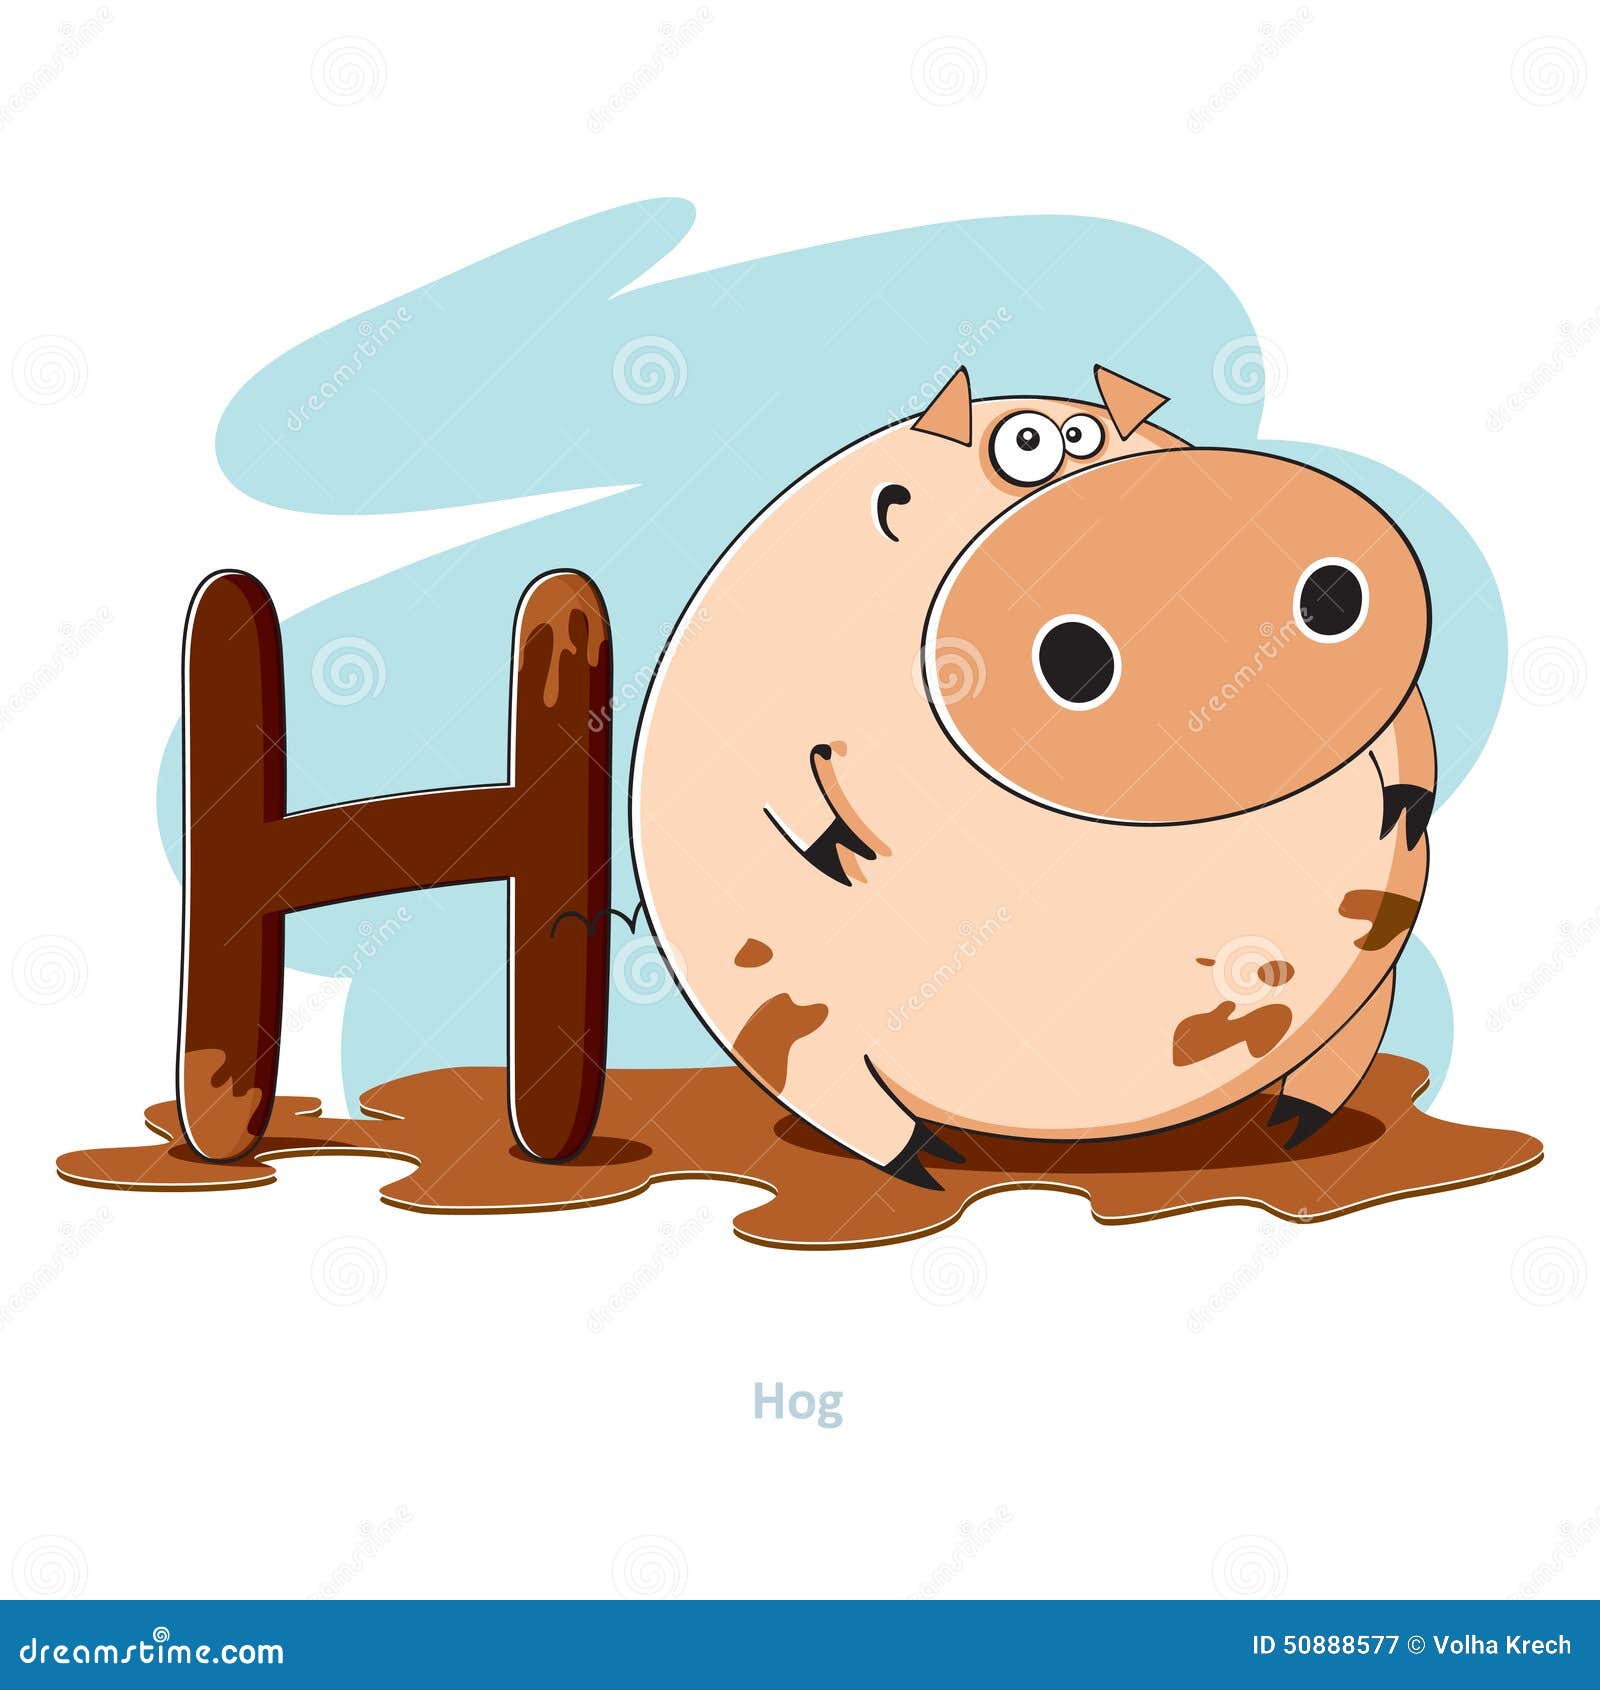 letter h with funny hog